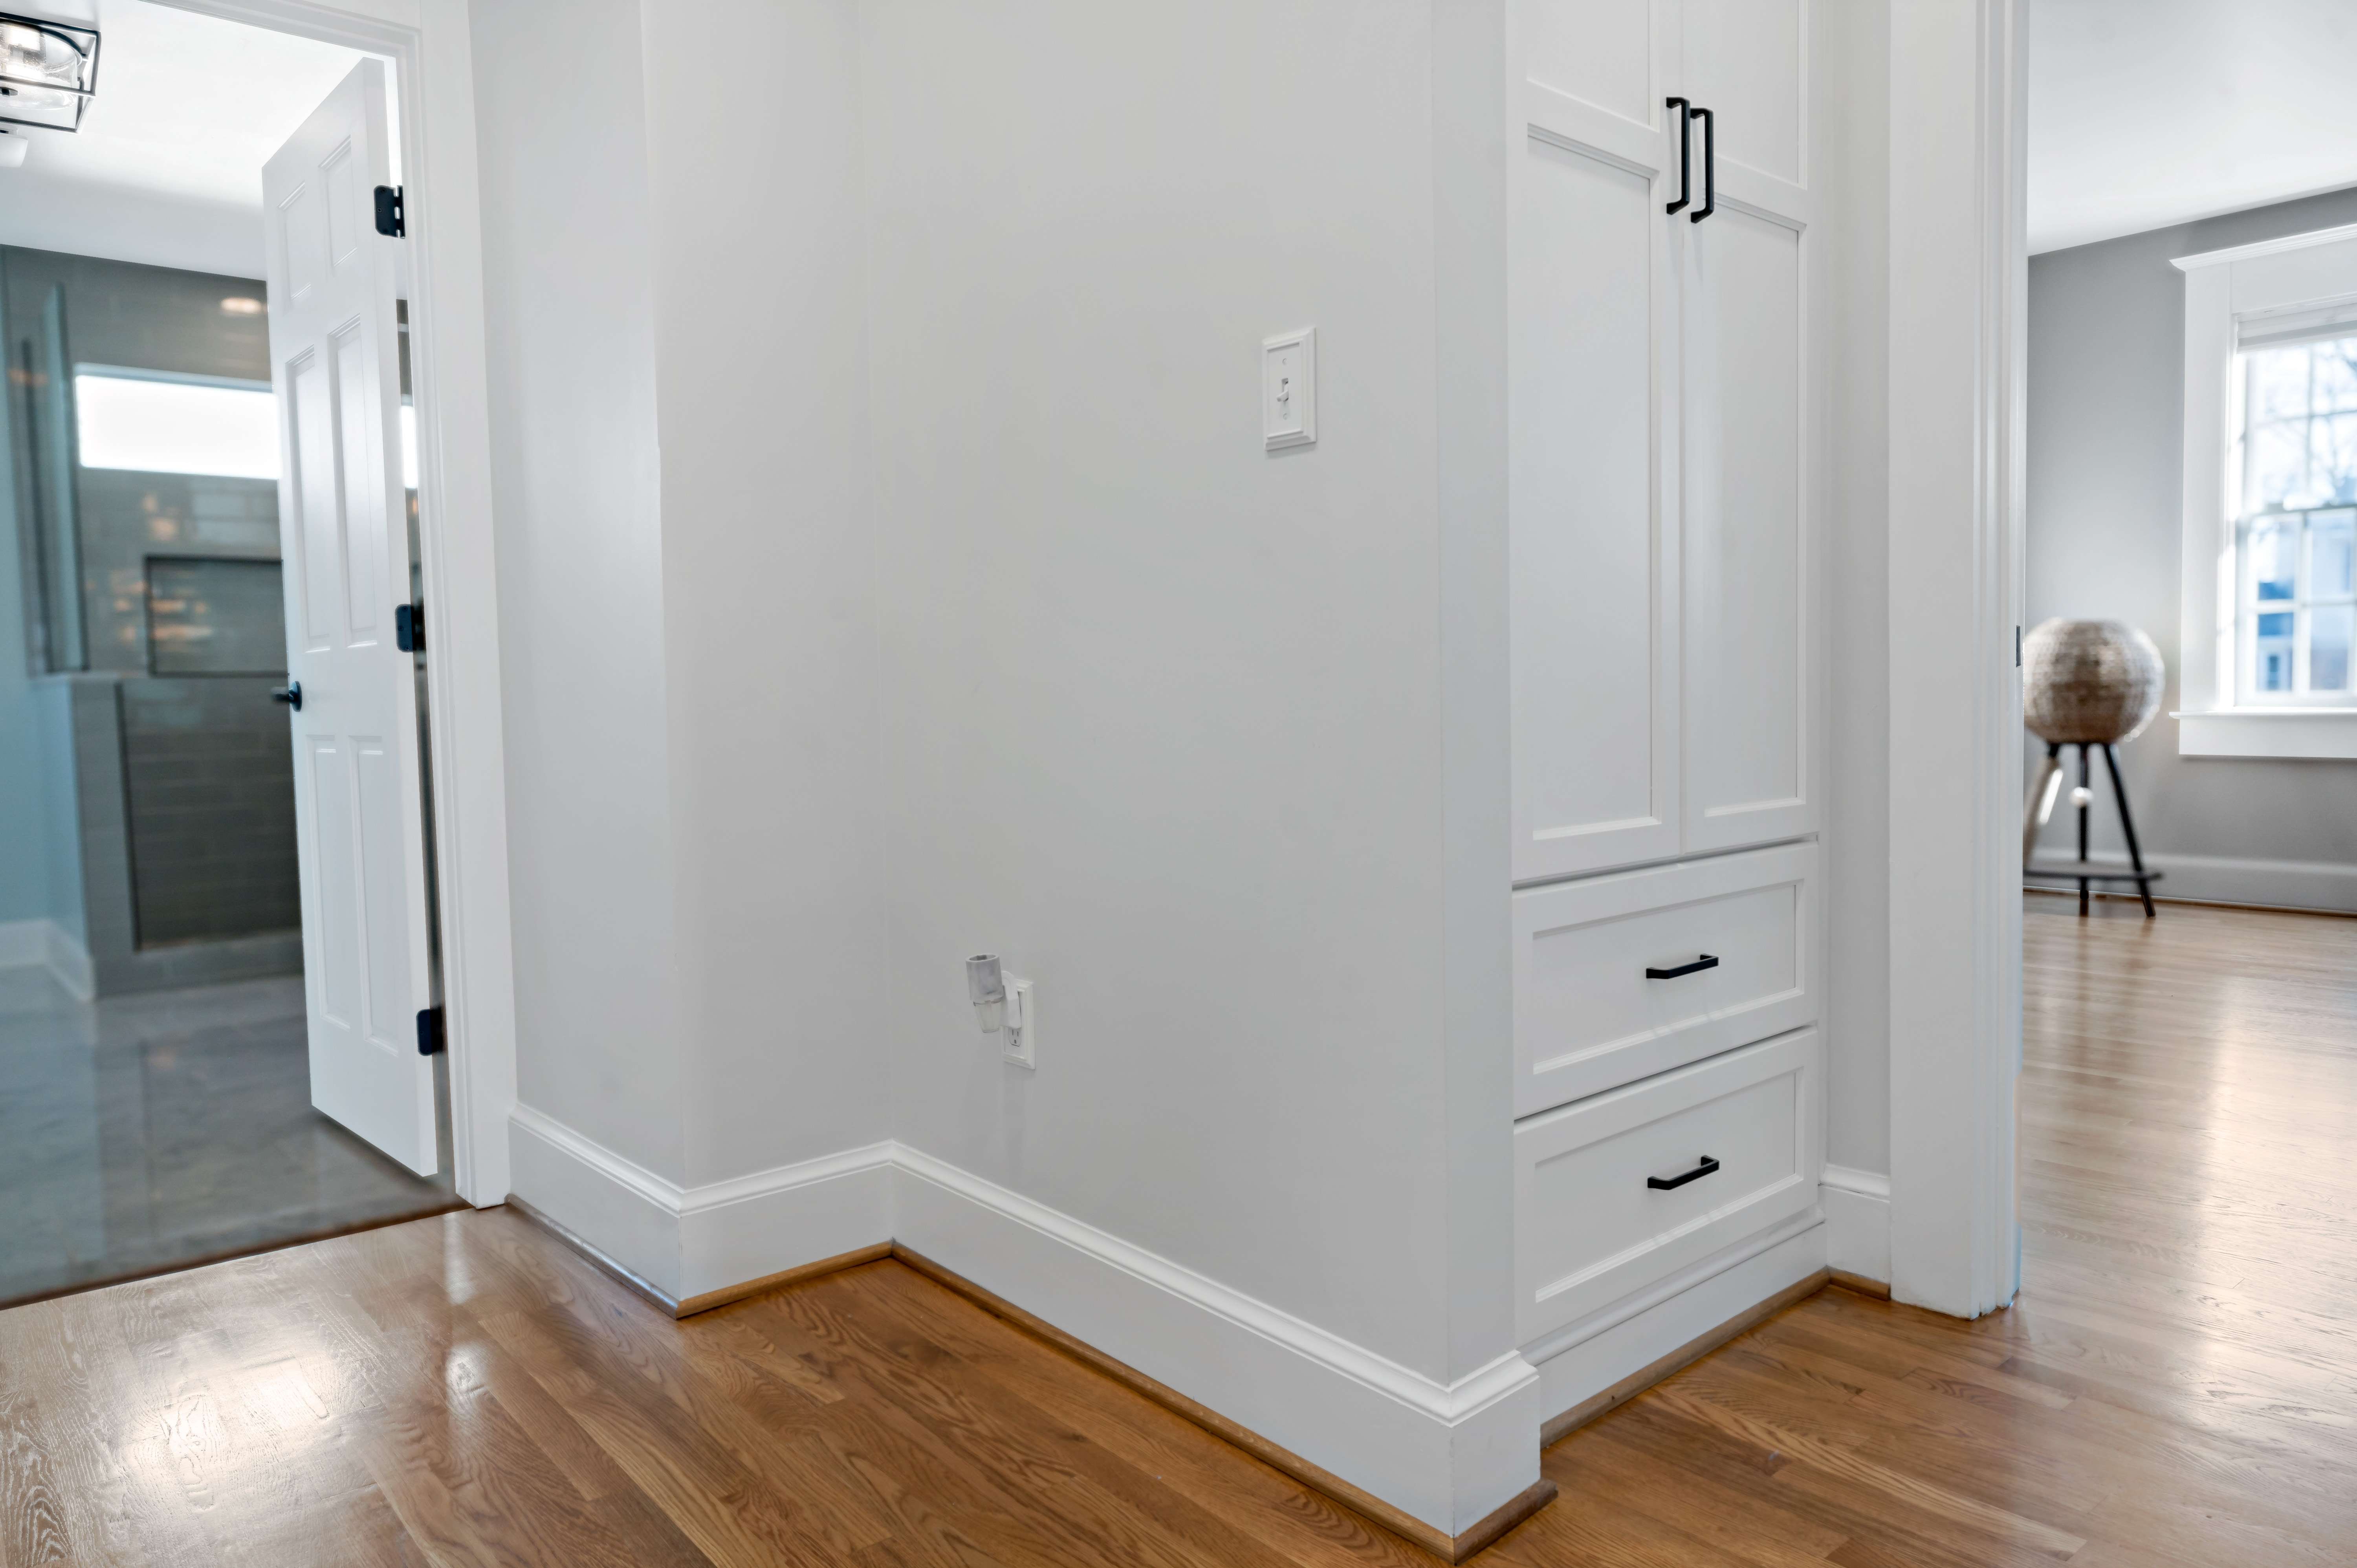 Hallway detailing with white trim